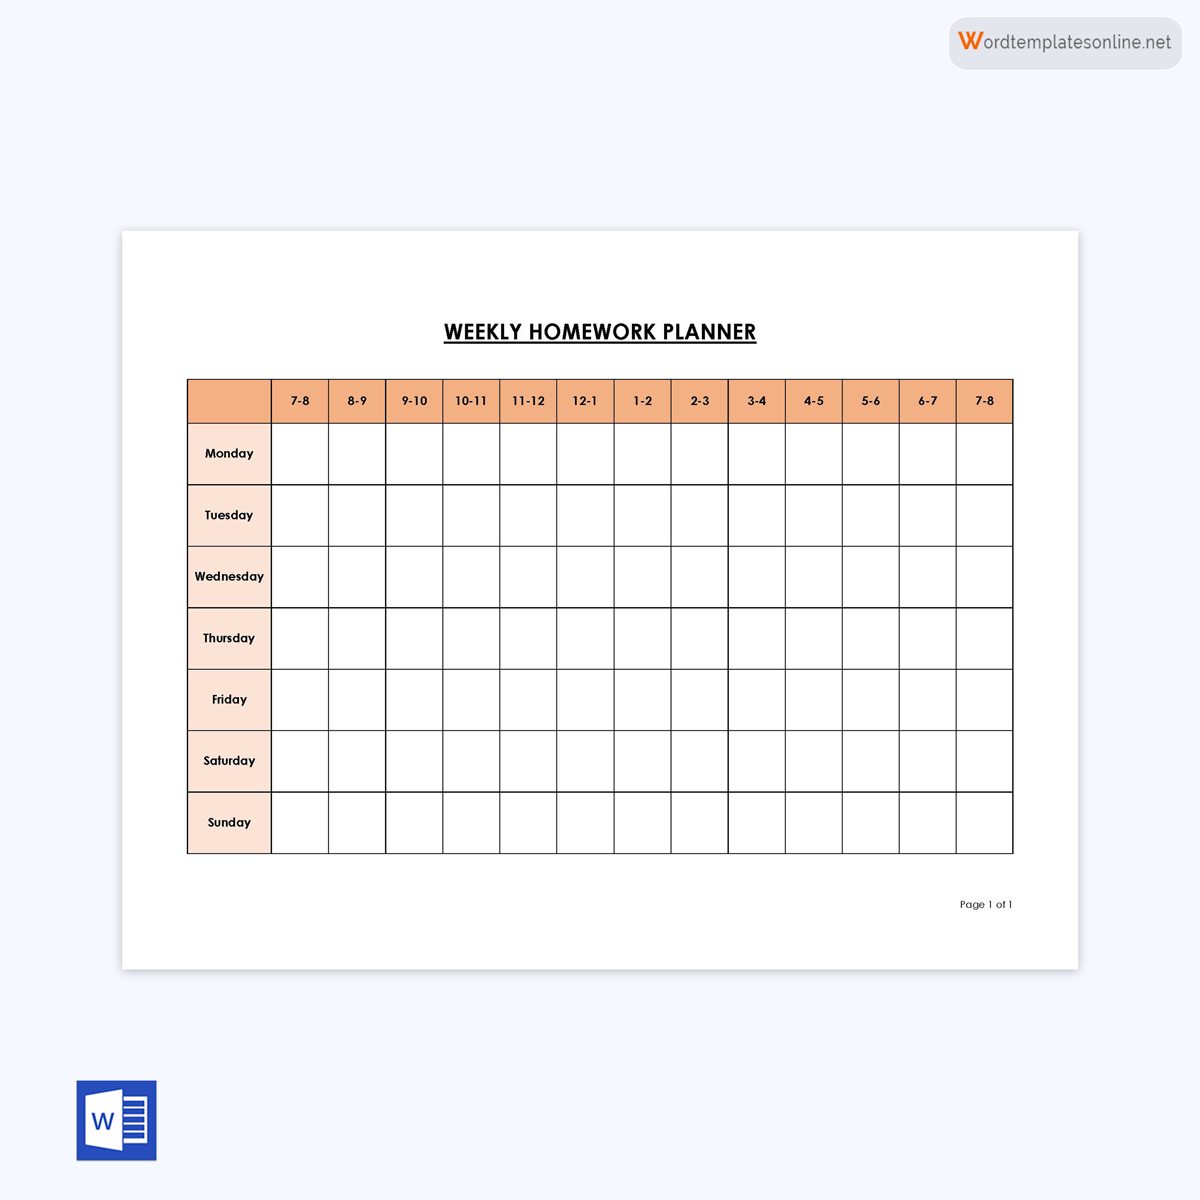 Homework planner form example - word format